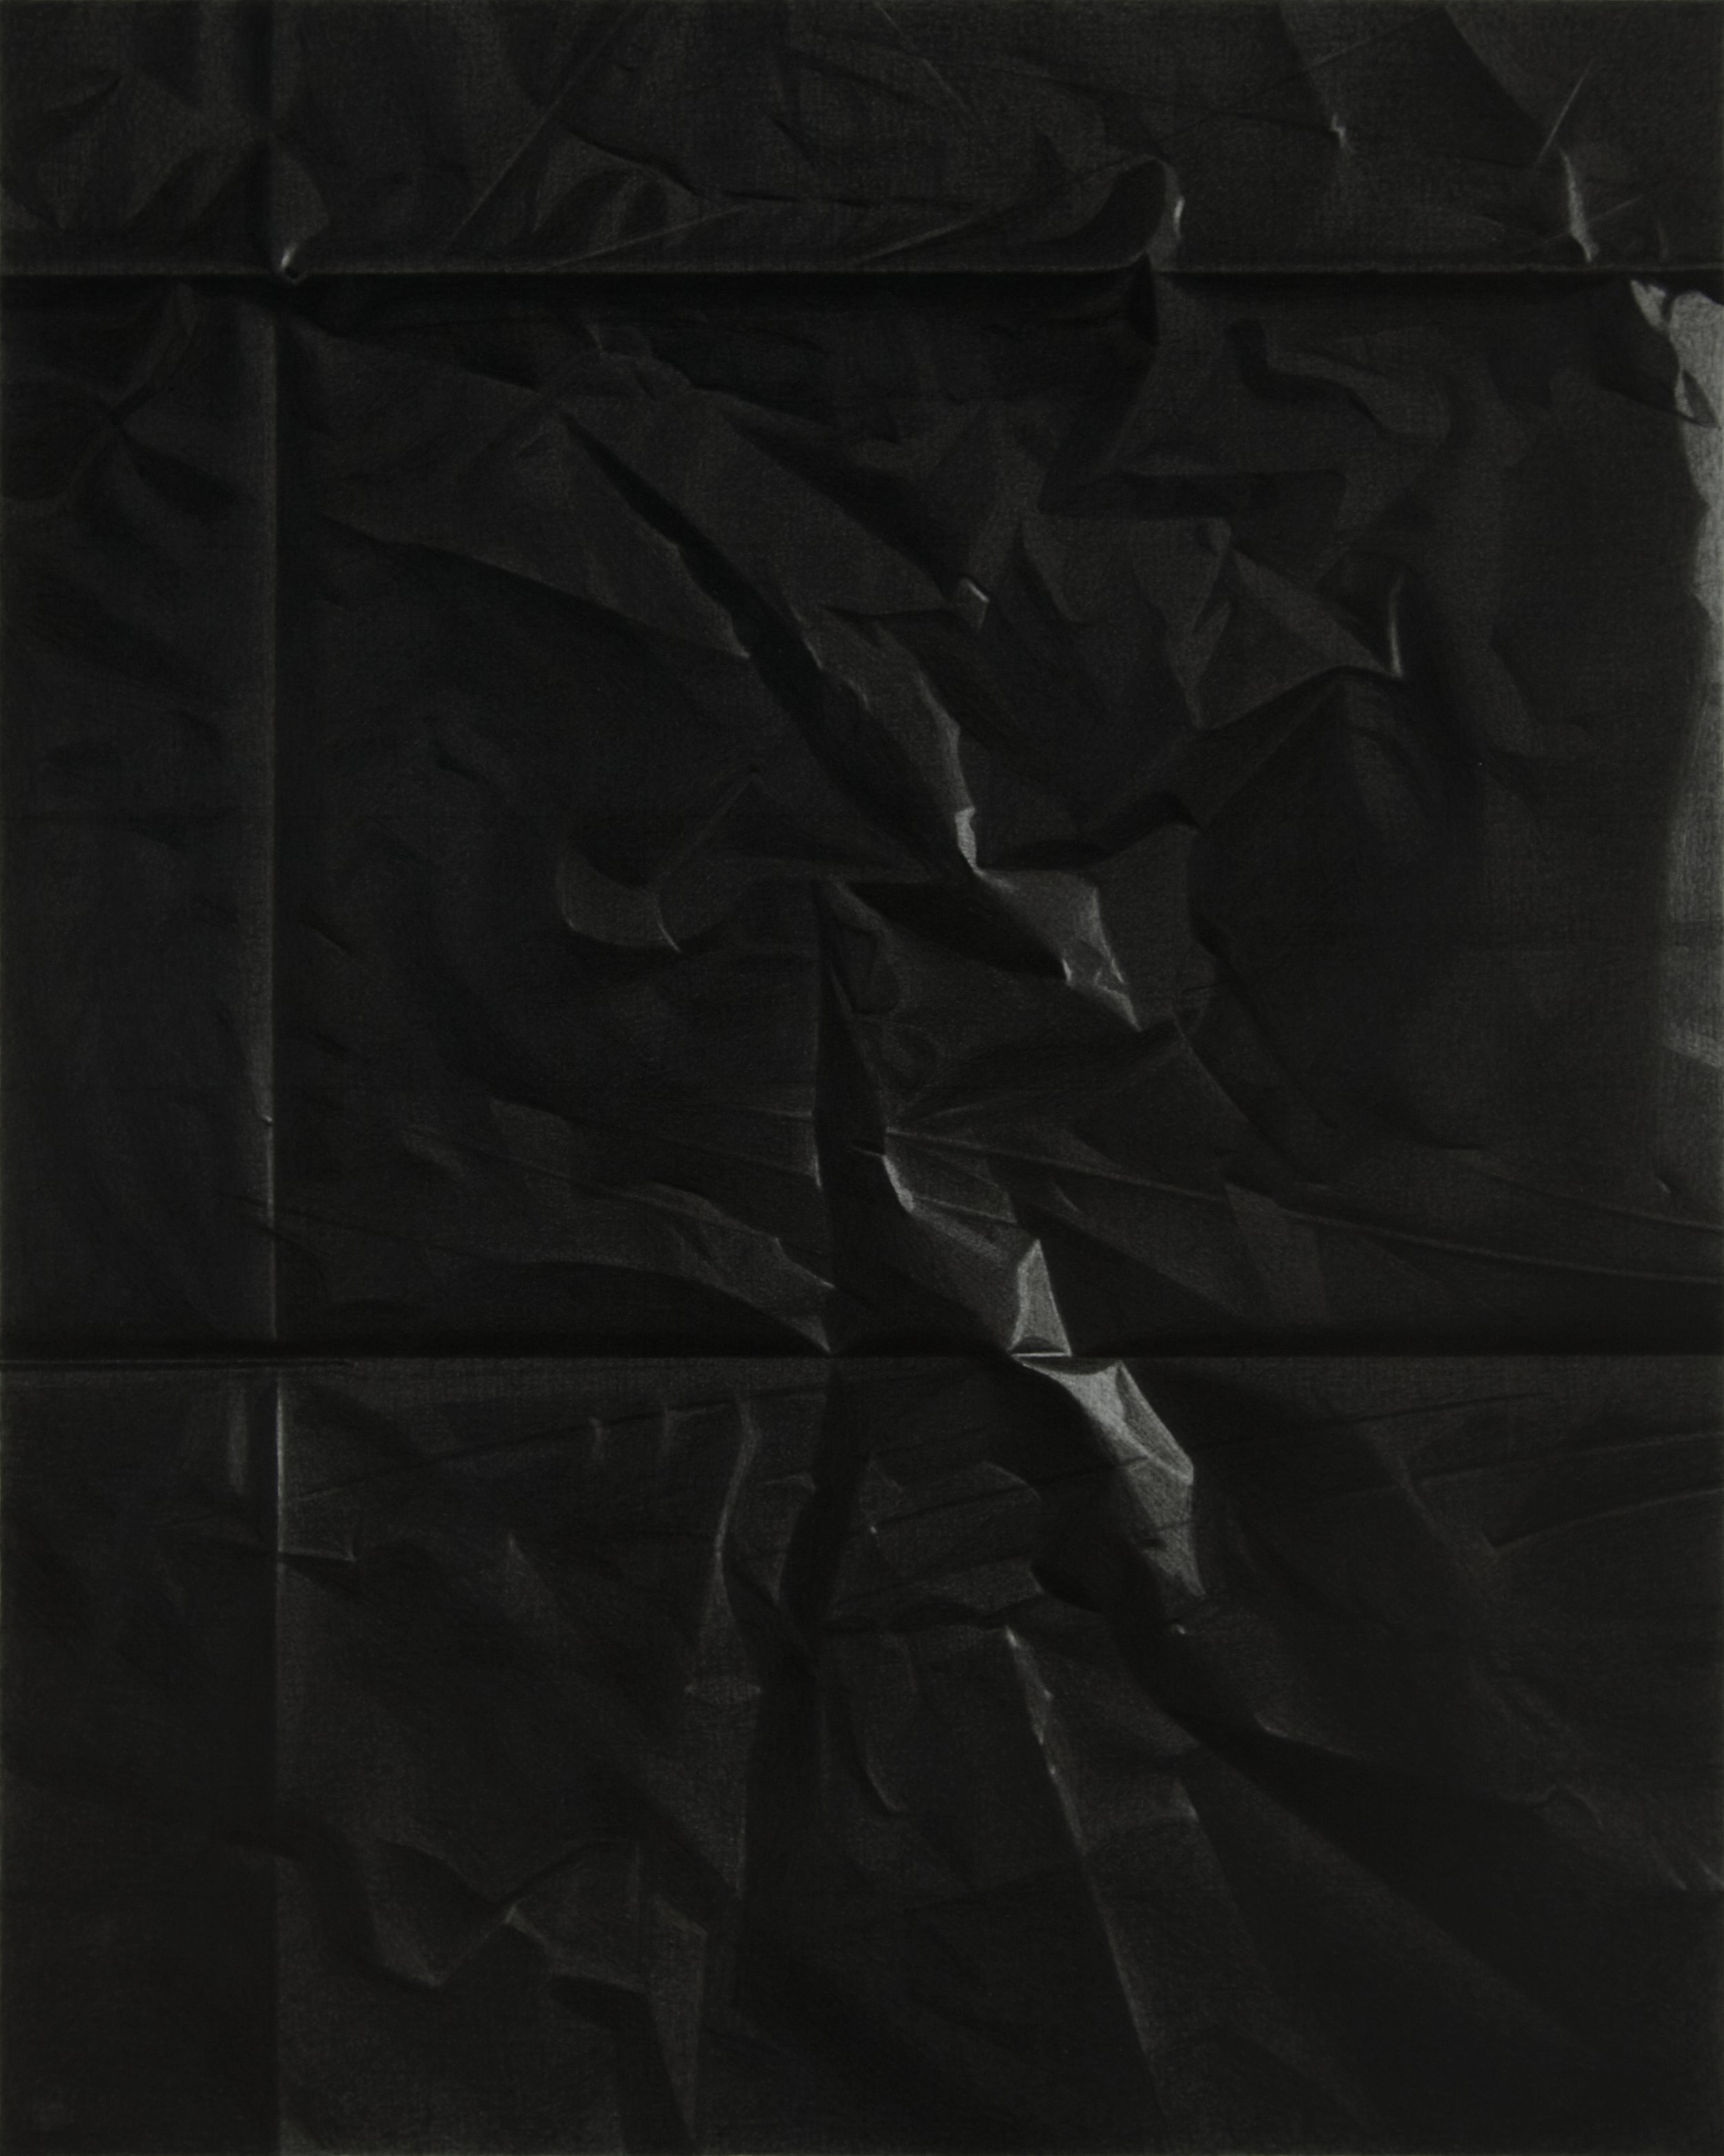  Stormy Passage  12x15”, graphite on paper, 2013   